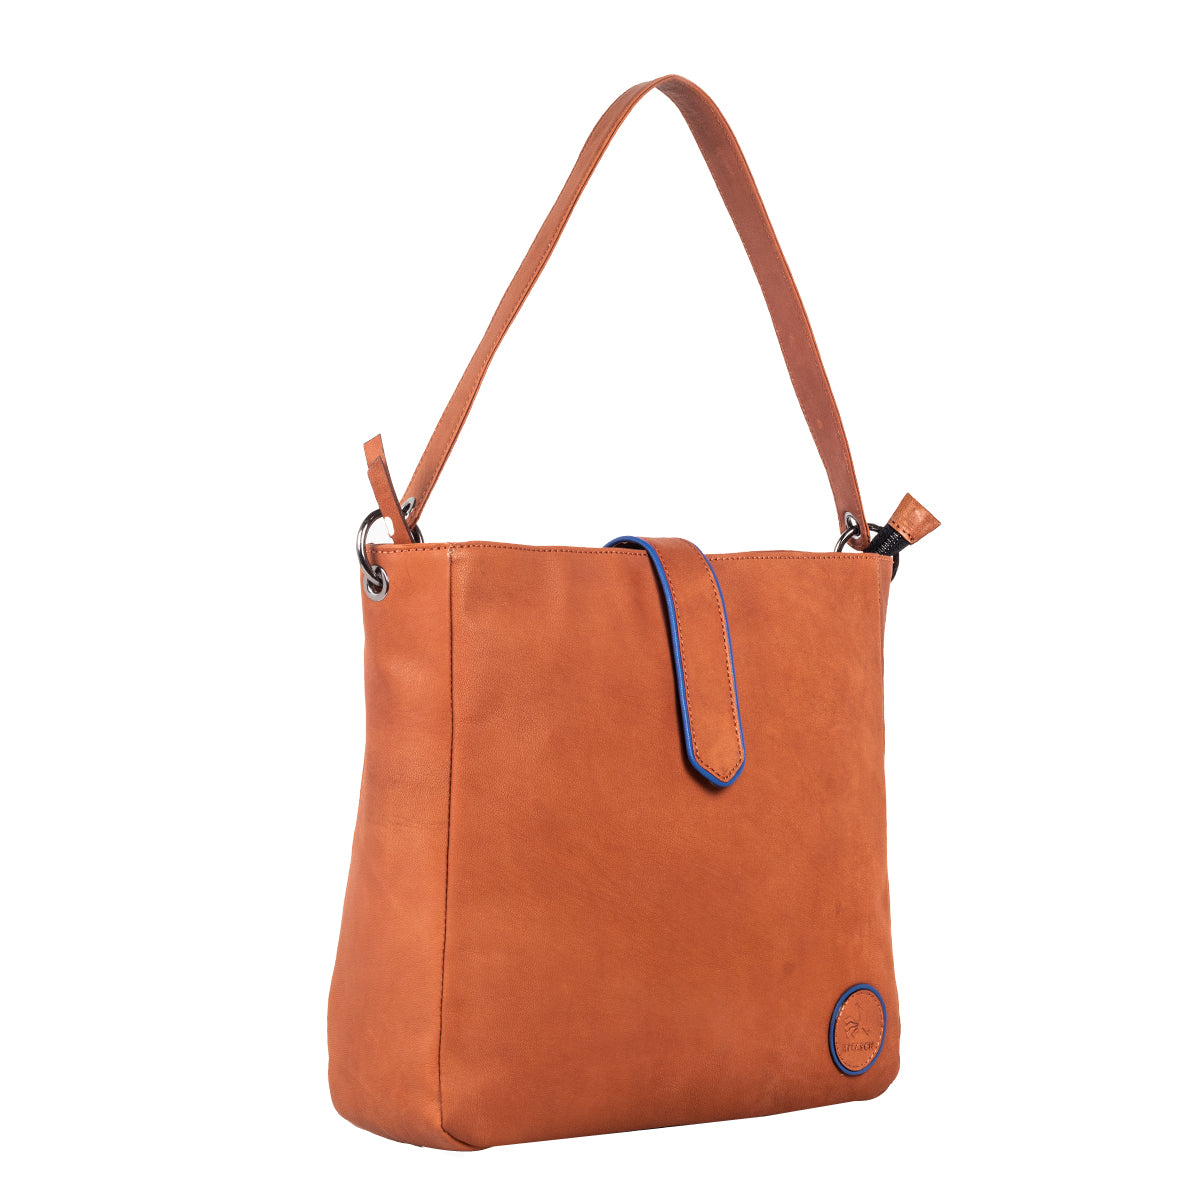 Leonore - spacious handbag